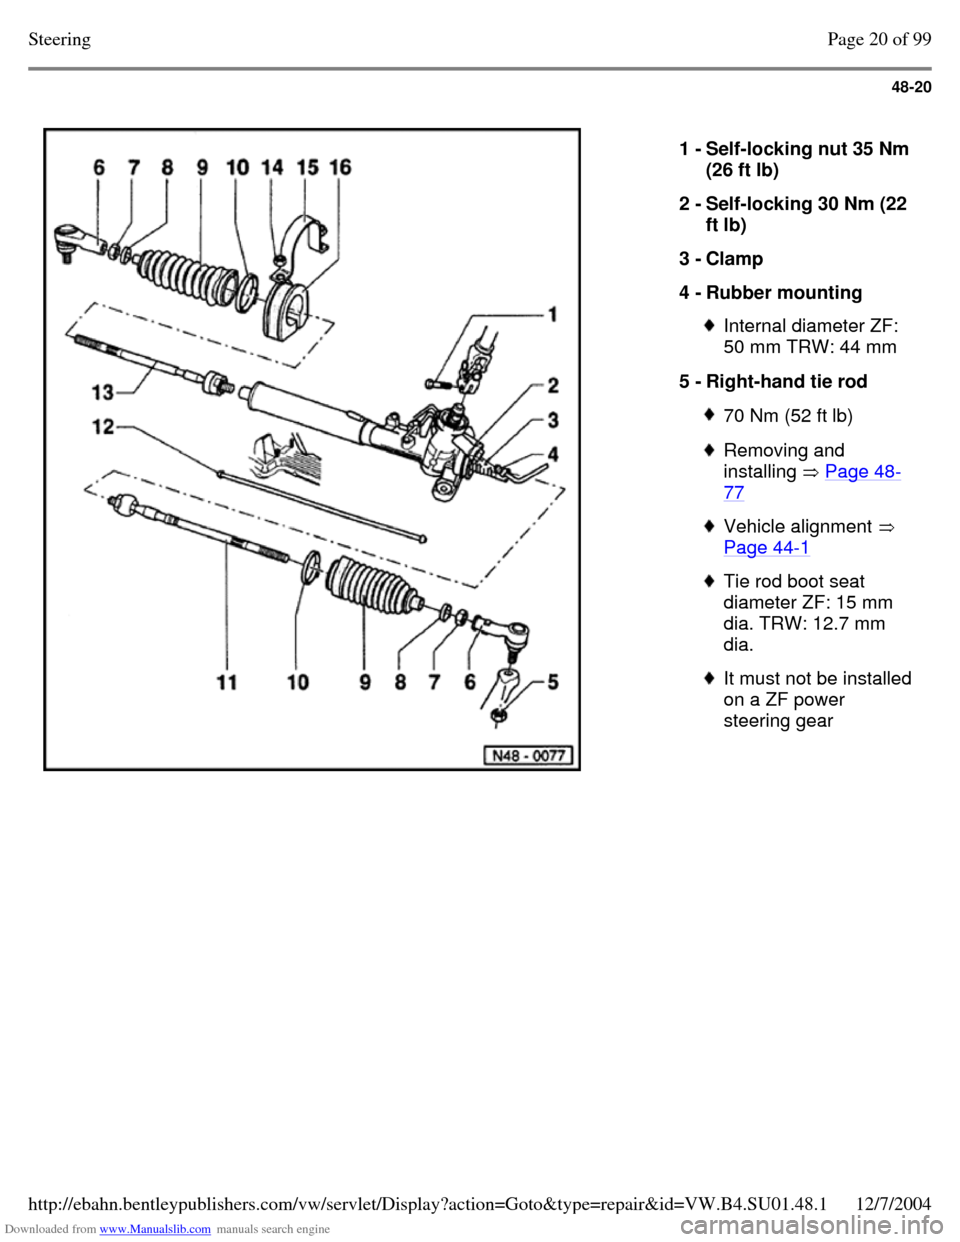 VOLKSWAGEN PASSAT 1995 B3, B4 / 3.G Service Workshop Manual Downloaded from www.Manualslib.com manuals search engine 48-20
   
1 - Self-locking nut 35 Nm 
(26 ft lb) 
2 - Self-locking 30 Nm (22 
ft lb) 
3 - Clamp 
4 - Rubber mounting  Internal diameter ZF: 
50